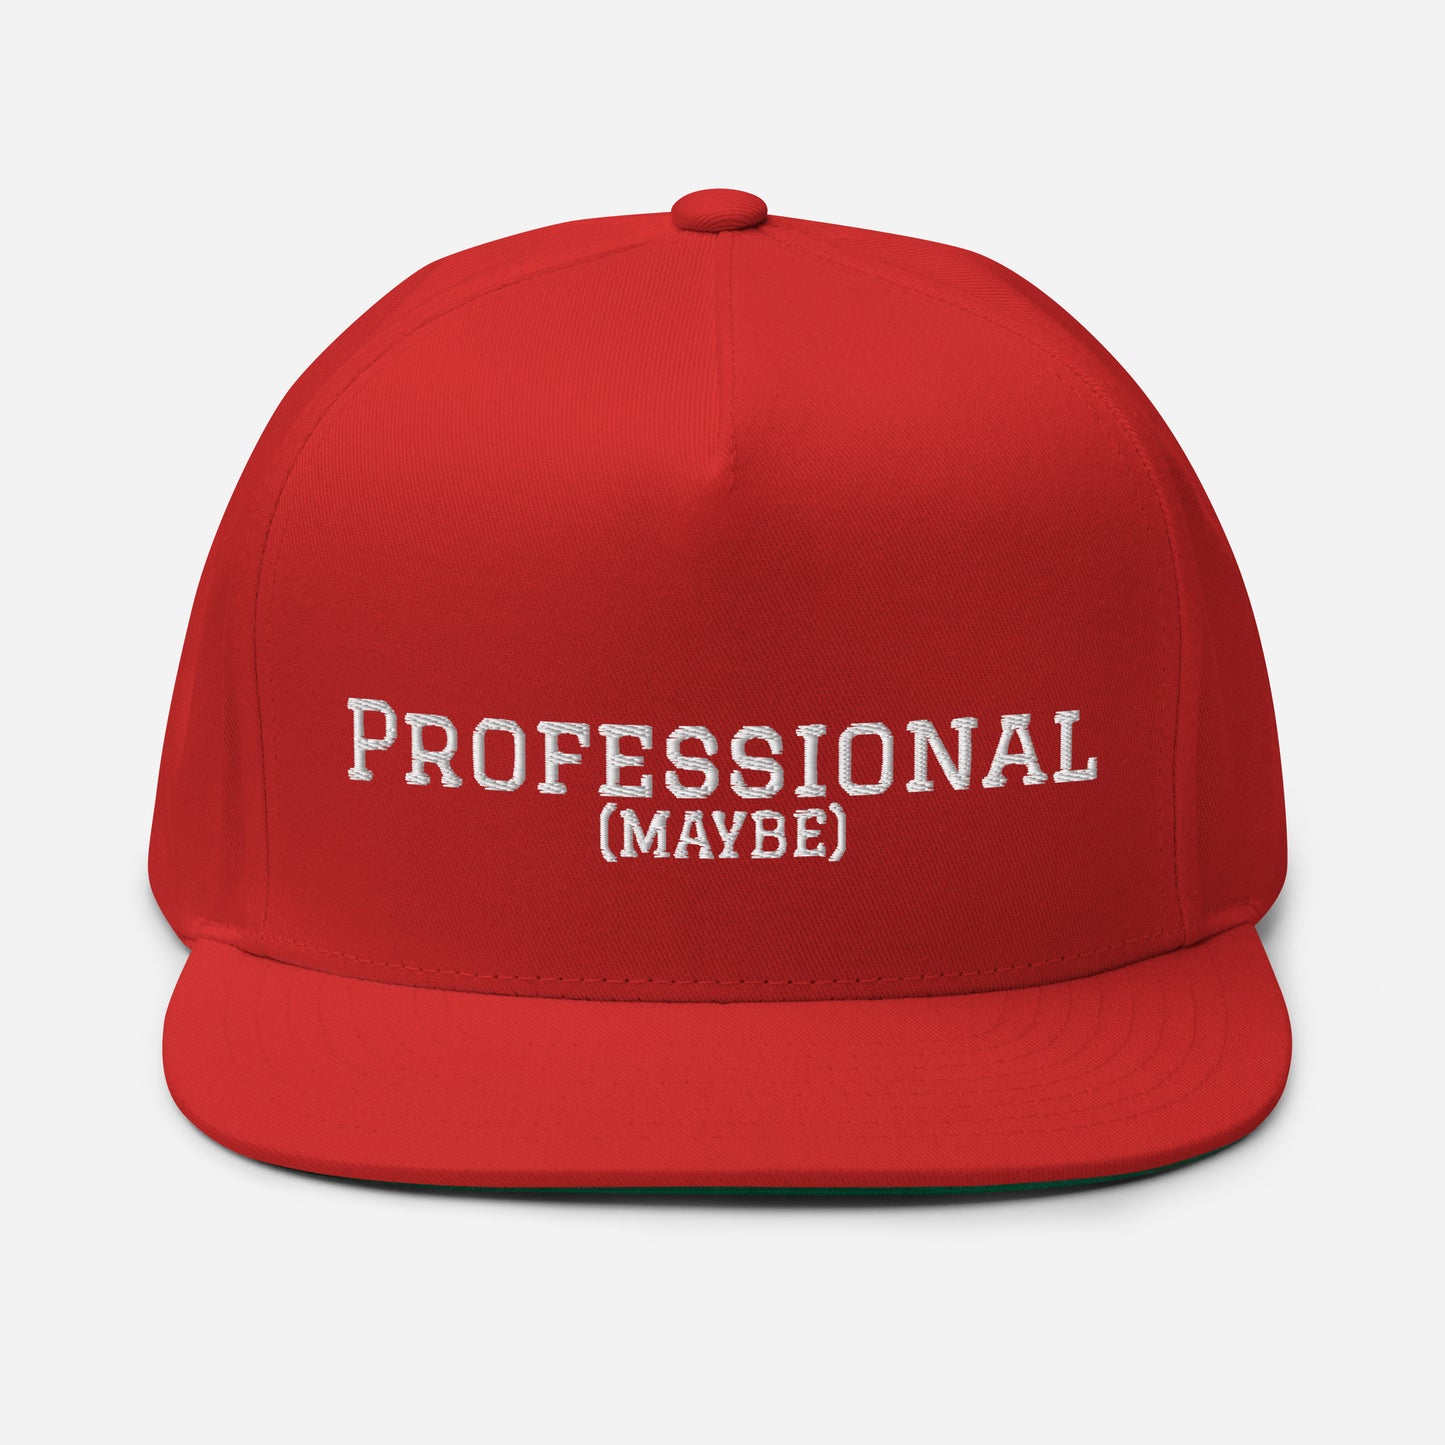 Professional (Maybe) Flat Bill Cap